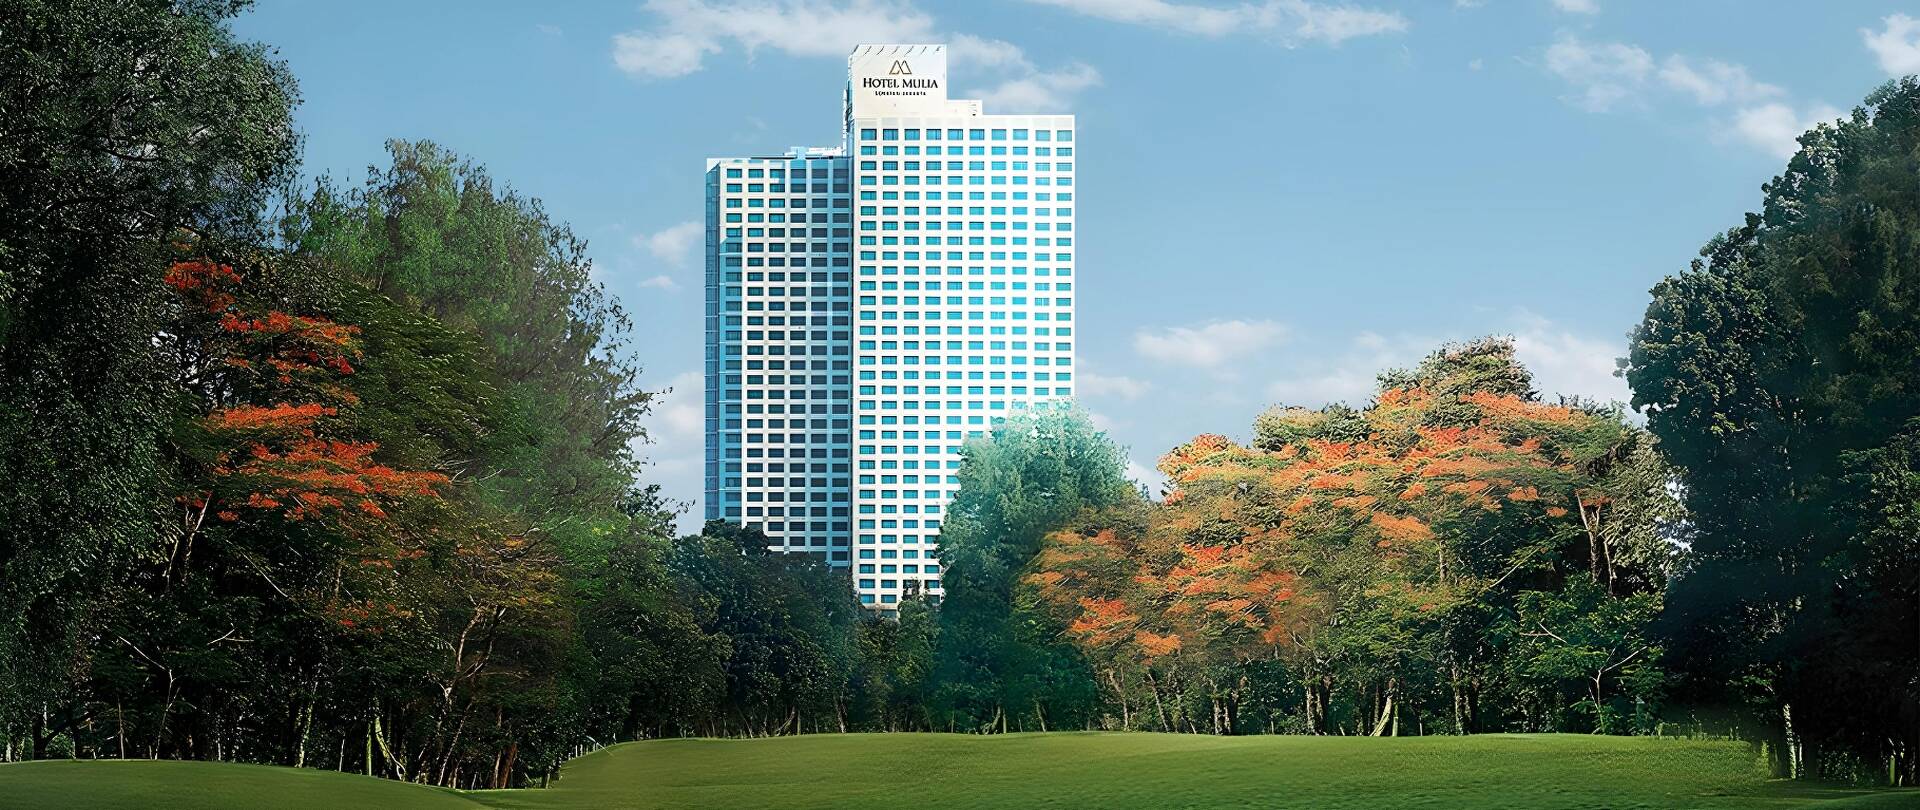 Platinum Privileges for Amex Cardholders | Hotel Mulia Senayan, Jakarta